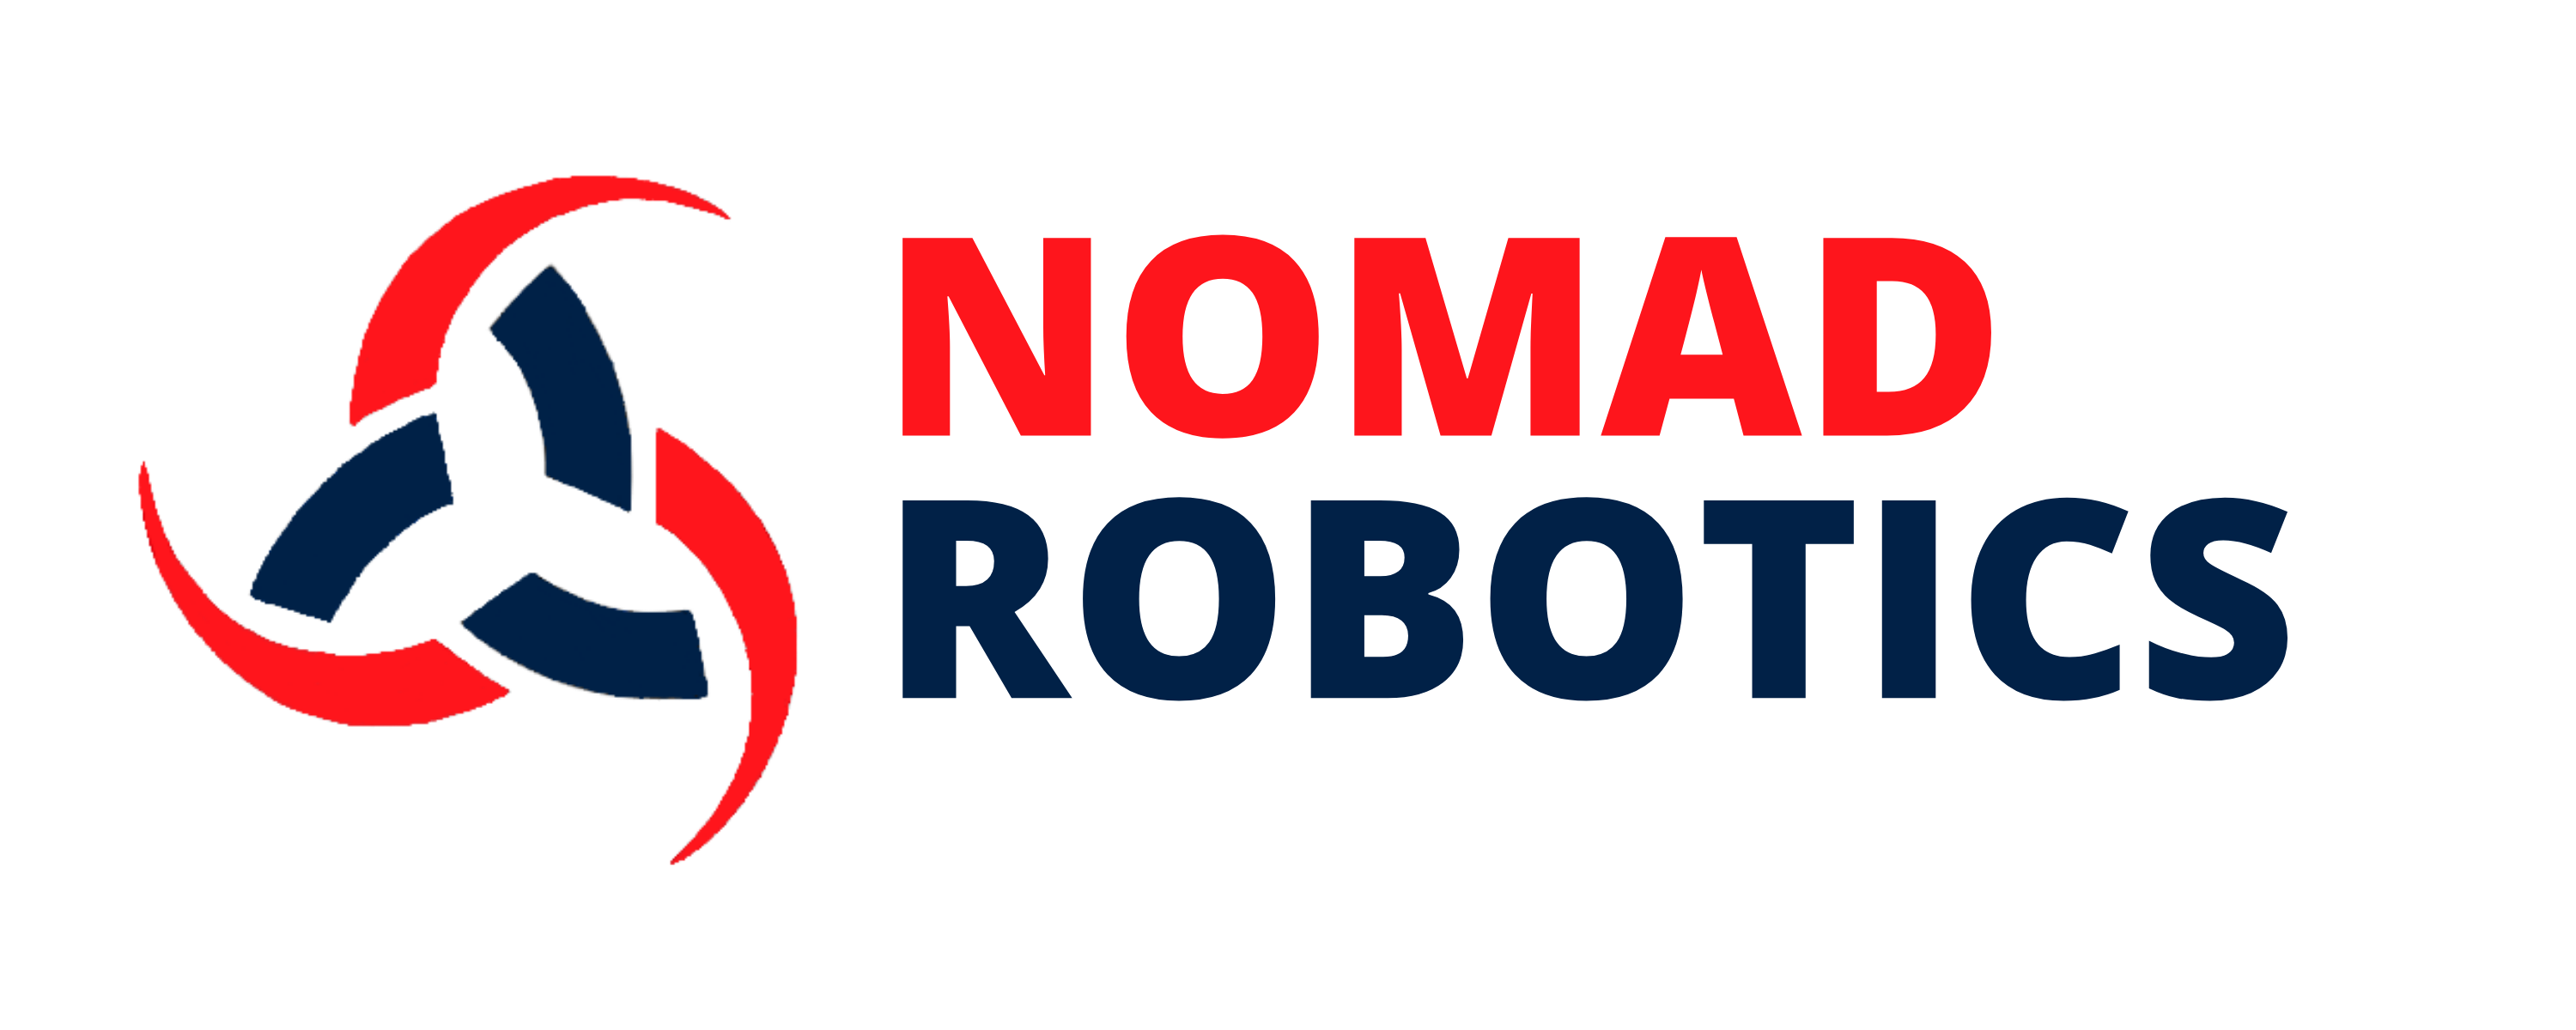 Nomad Robotics logo